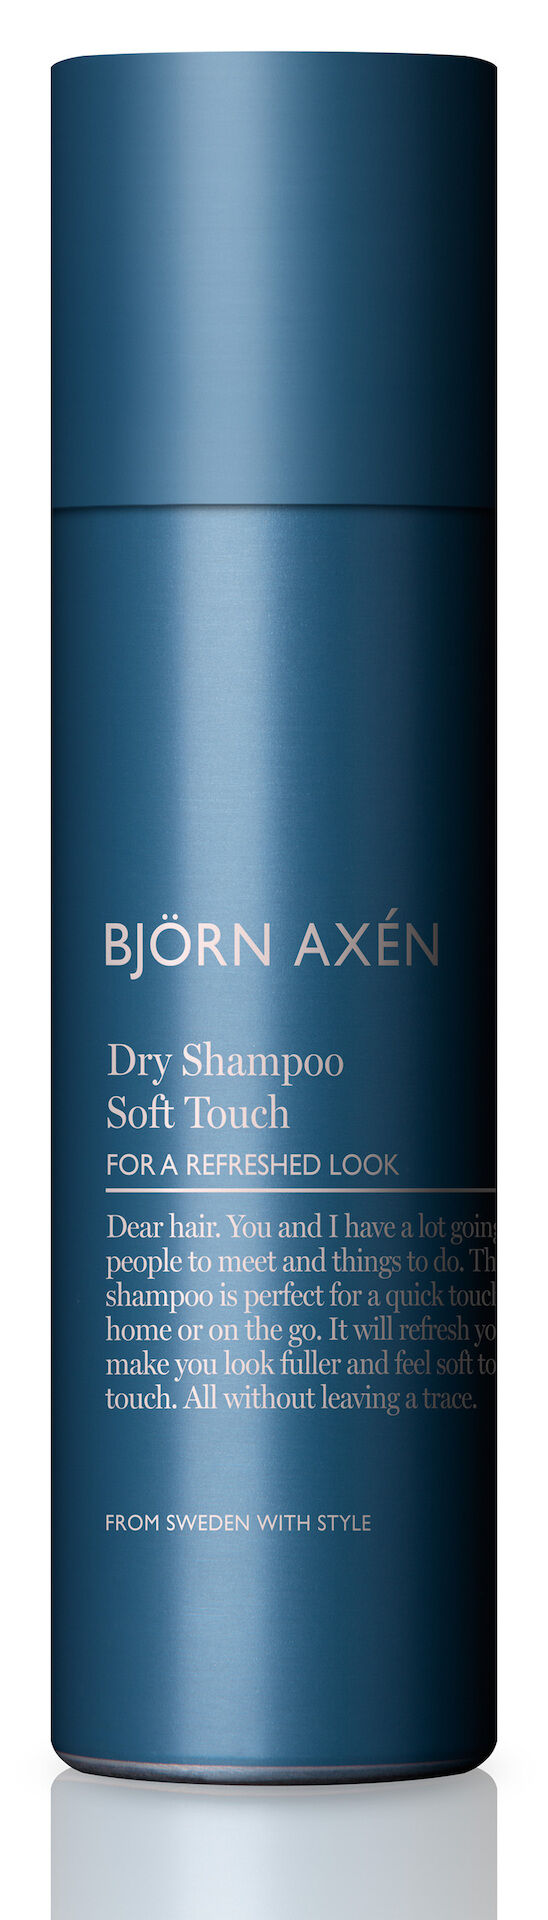 Björn Axén Dry Shampoo Soft Touch